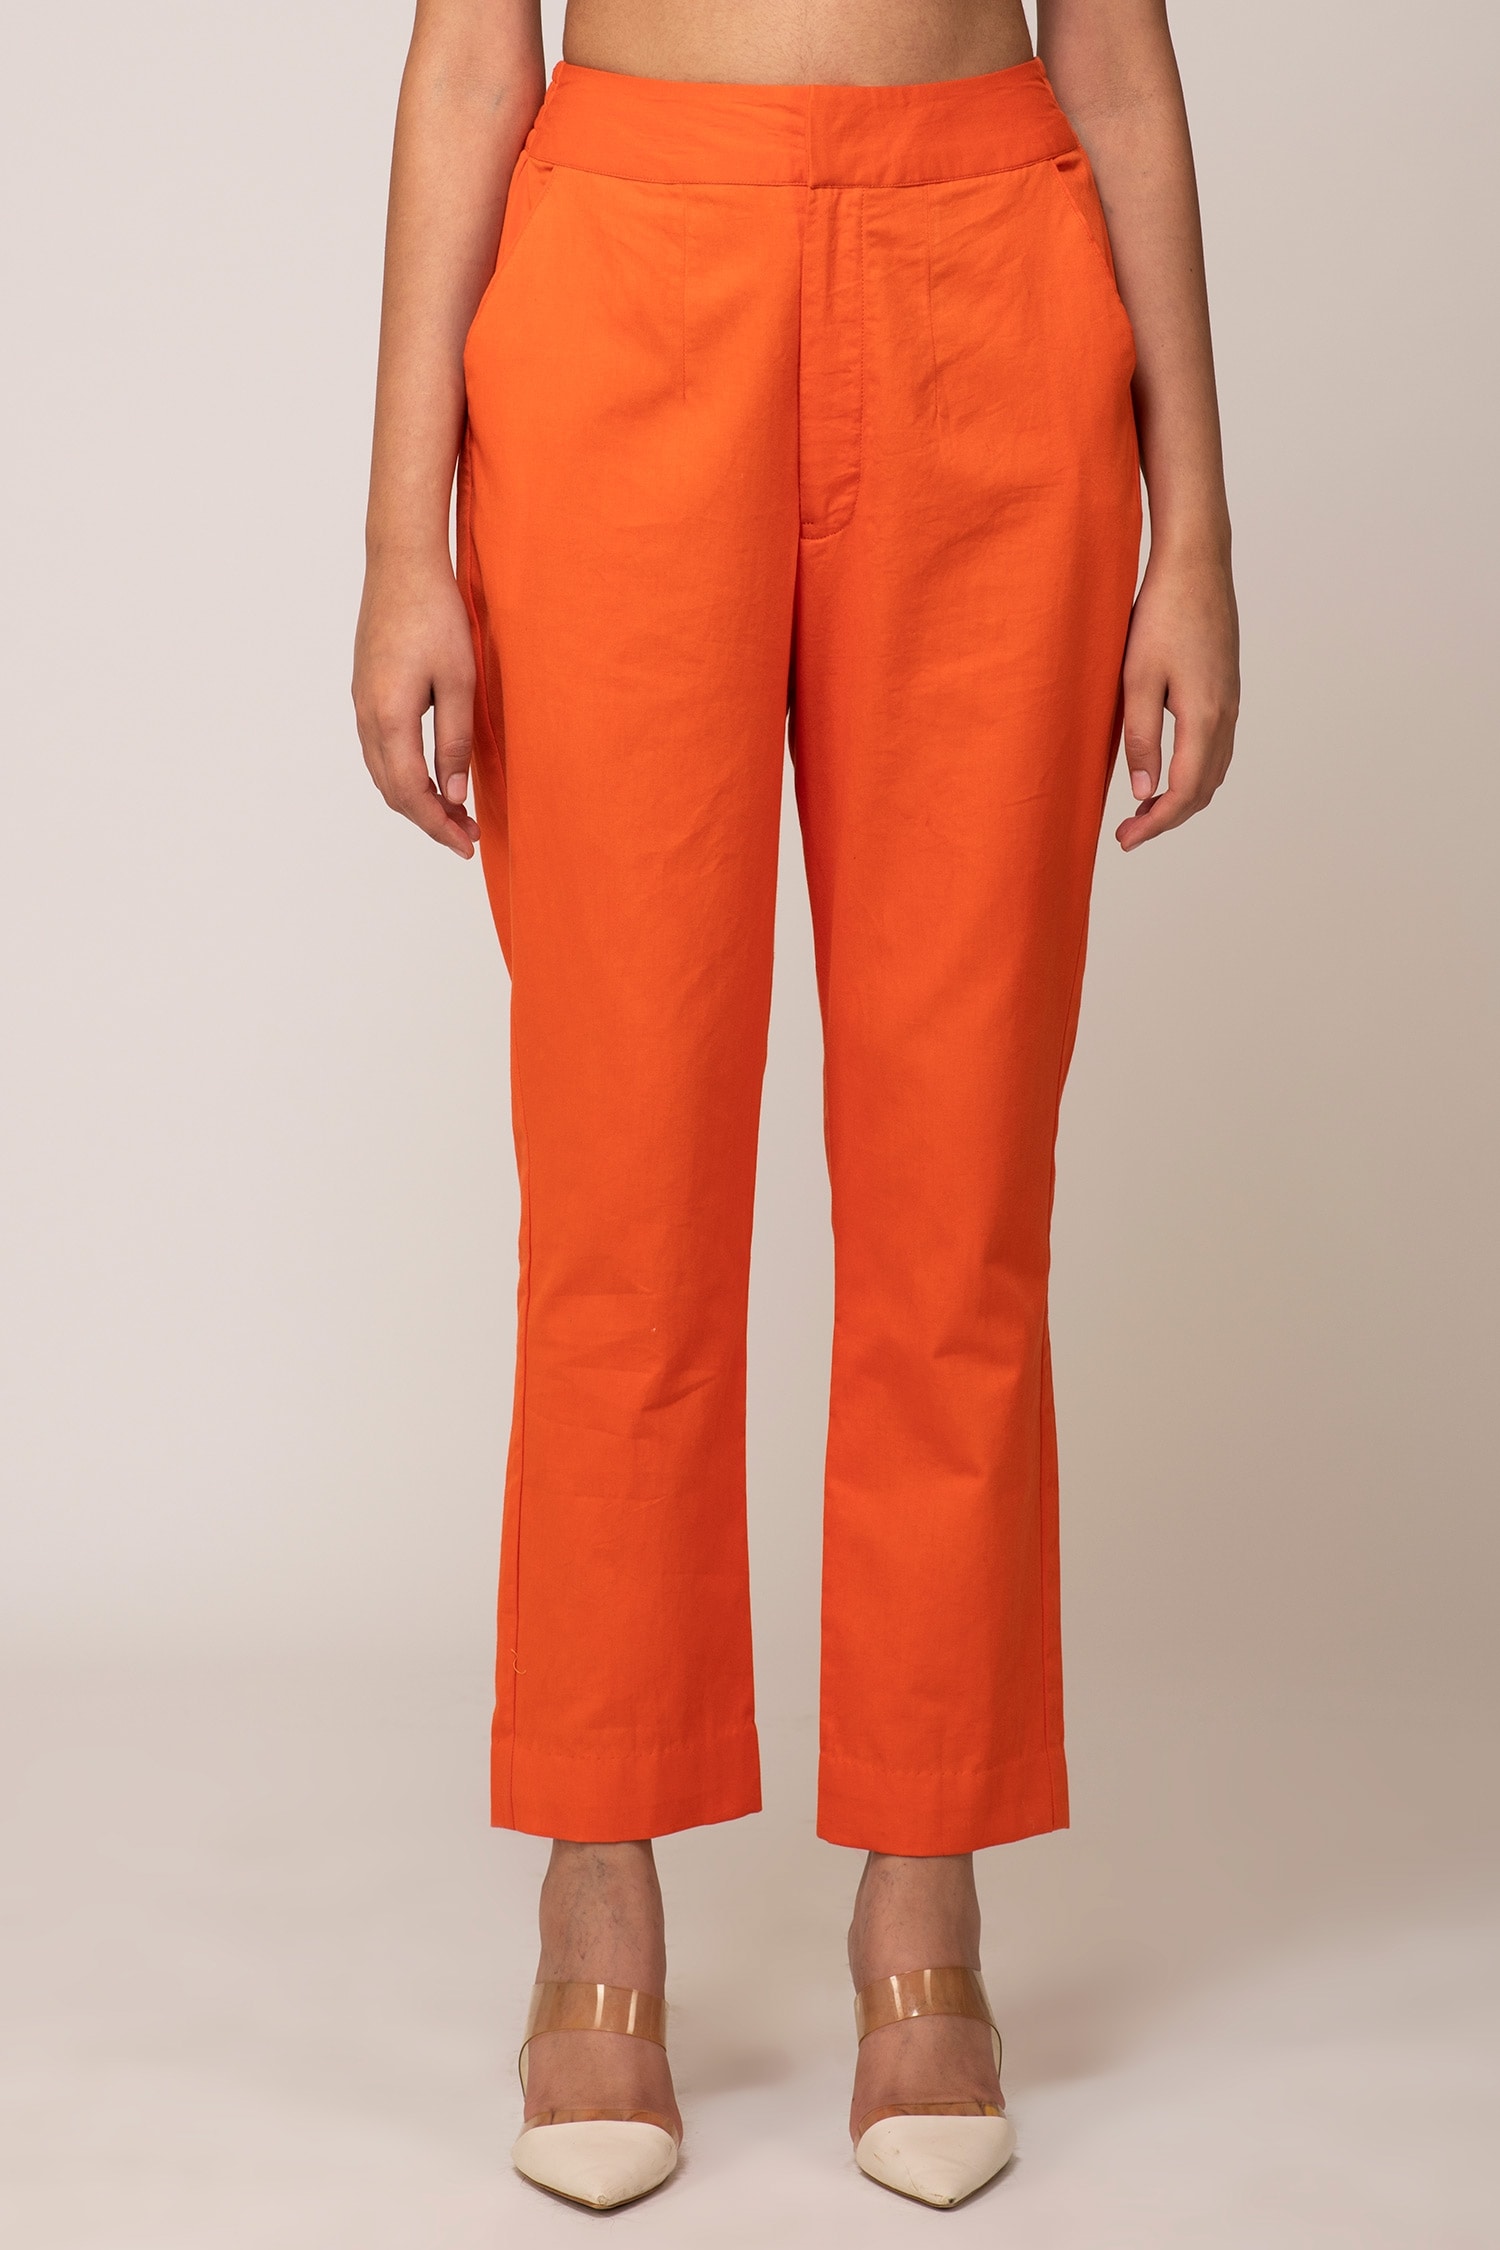 City Fashion Women's Slim Fit Orange Lumlum Cigarette Trouser Pants